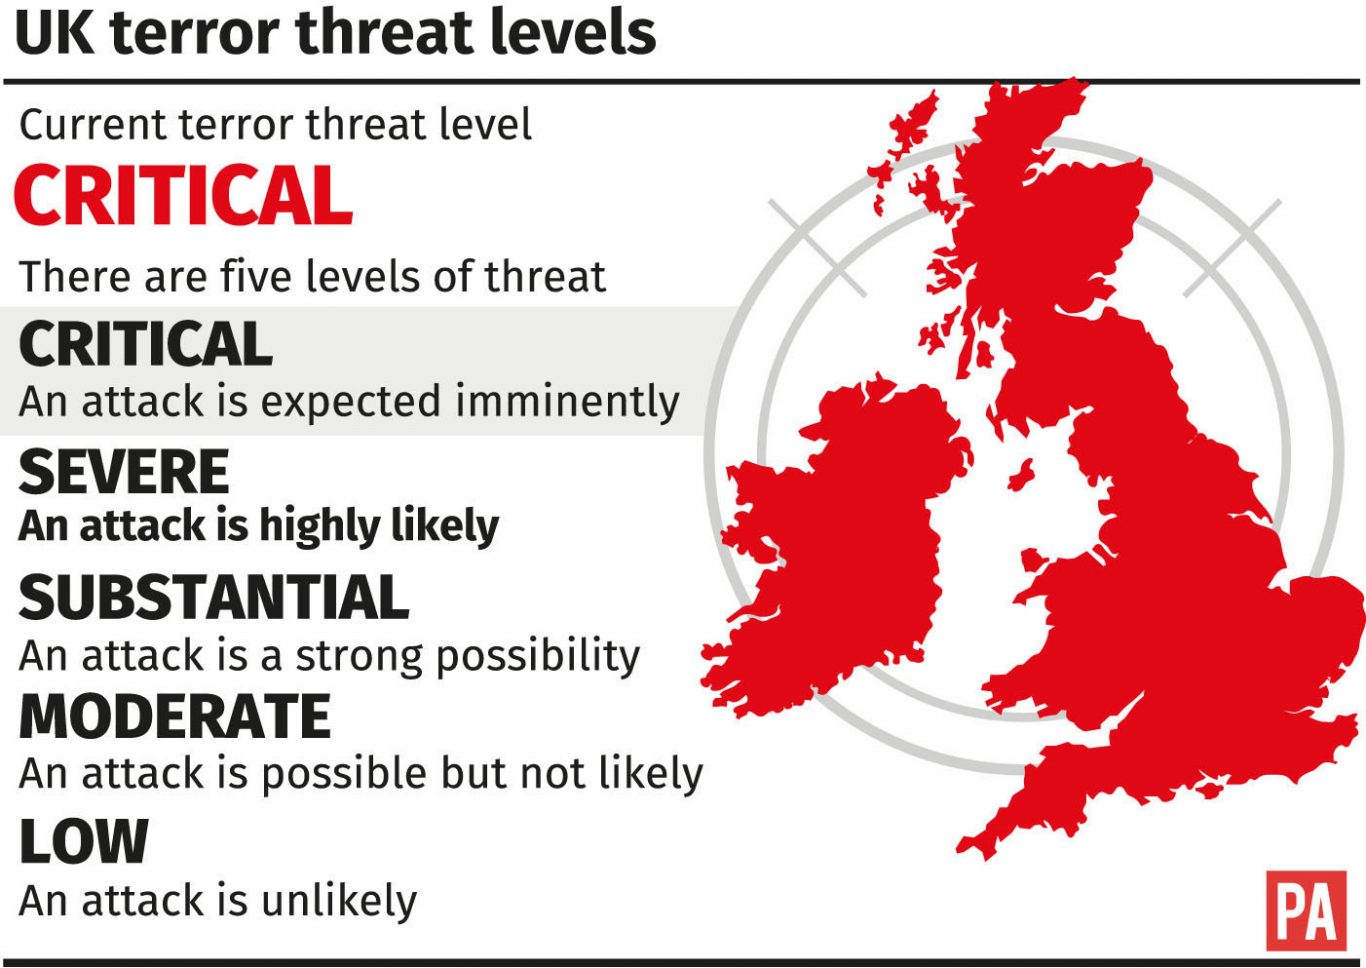 UK terror threat level raised to critical 